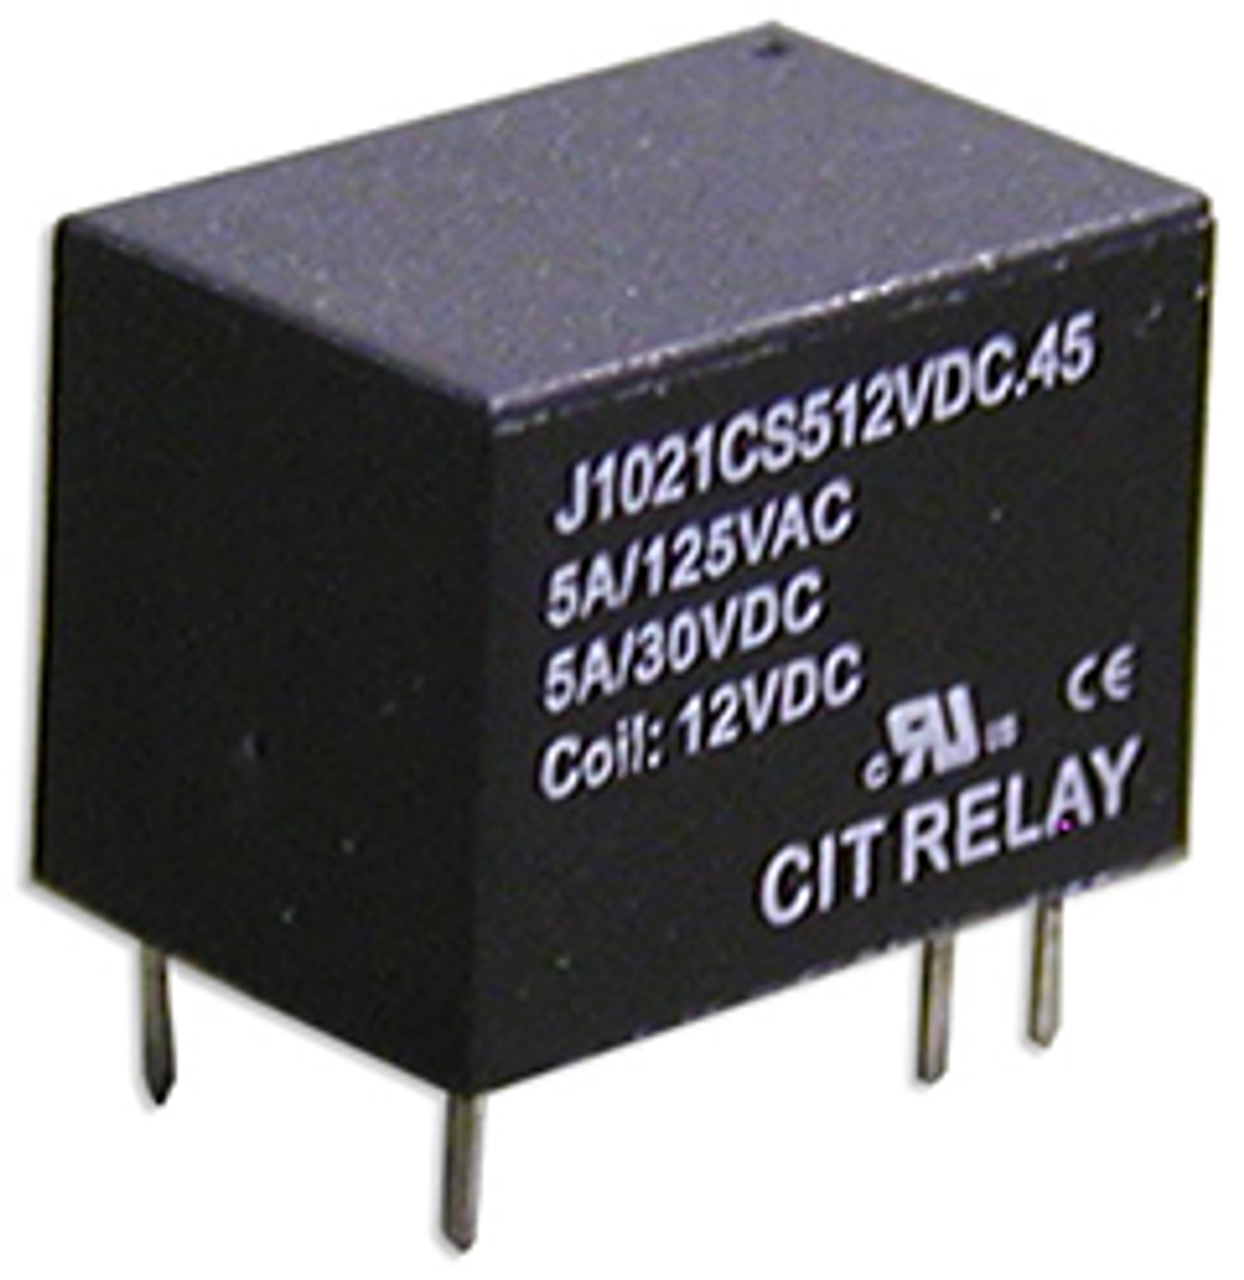 CIT Relay and Switch J1021CS312VDC.36 Power Relays